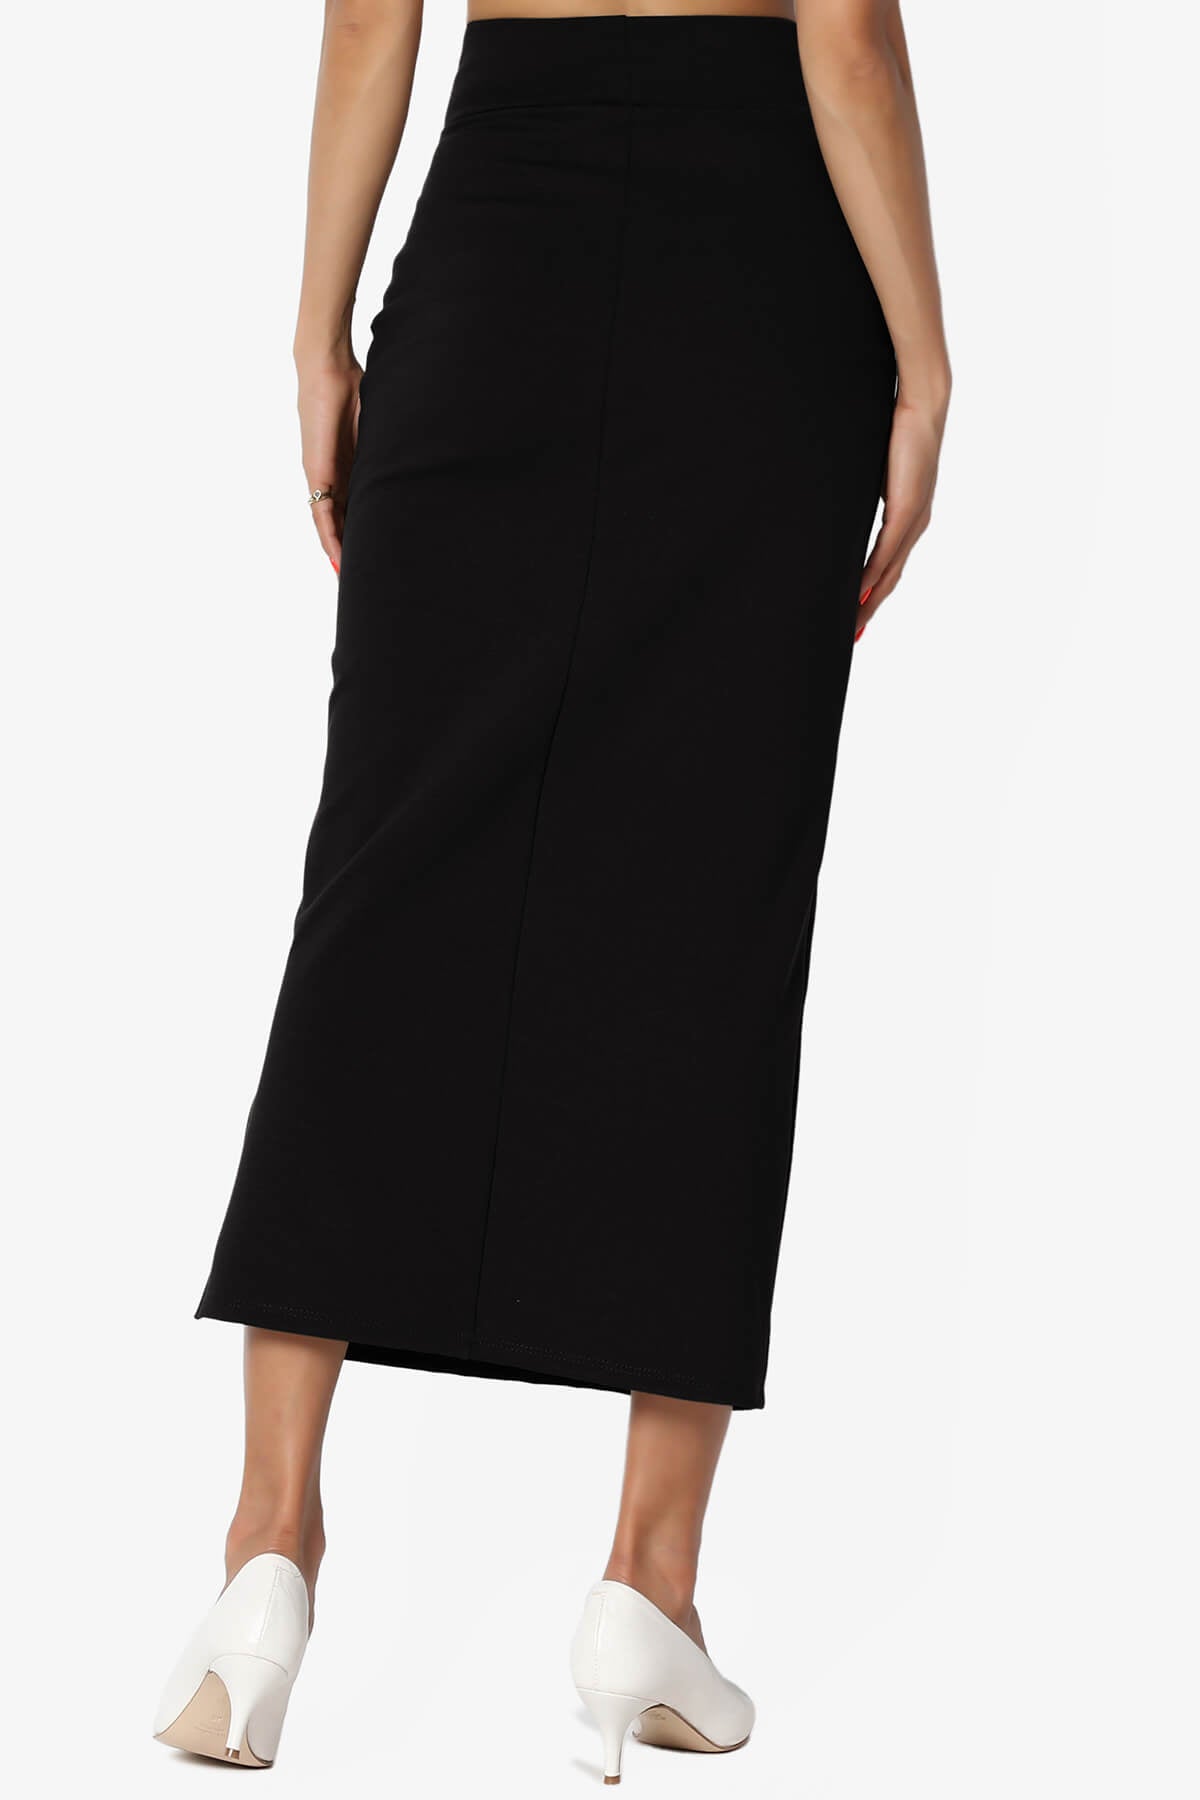 Carleta Mid Calf Pencil Skirt BLACK_2